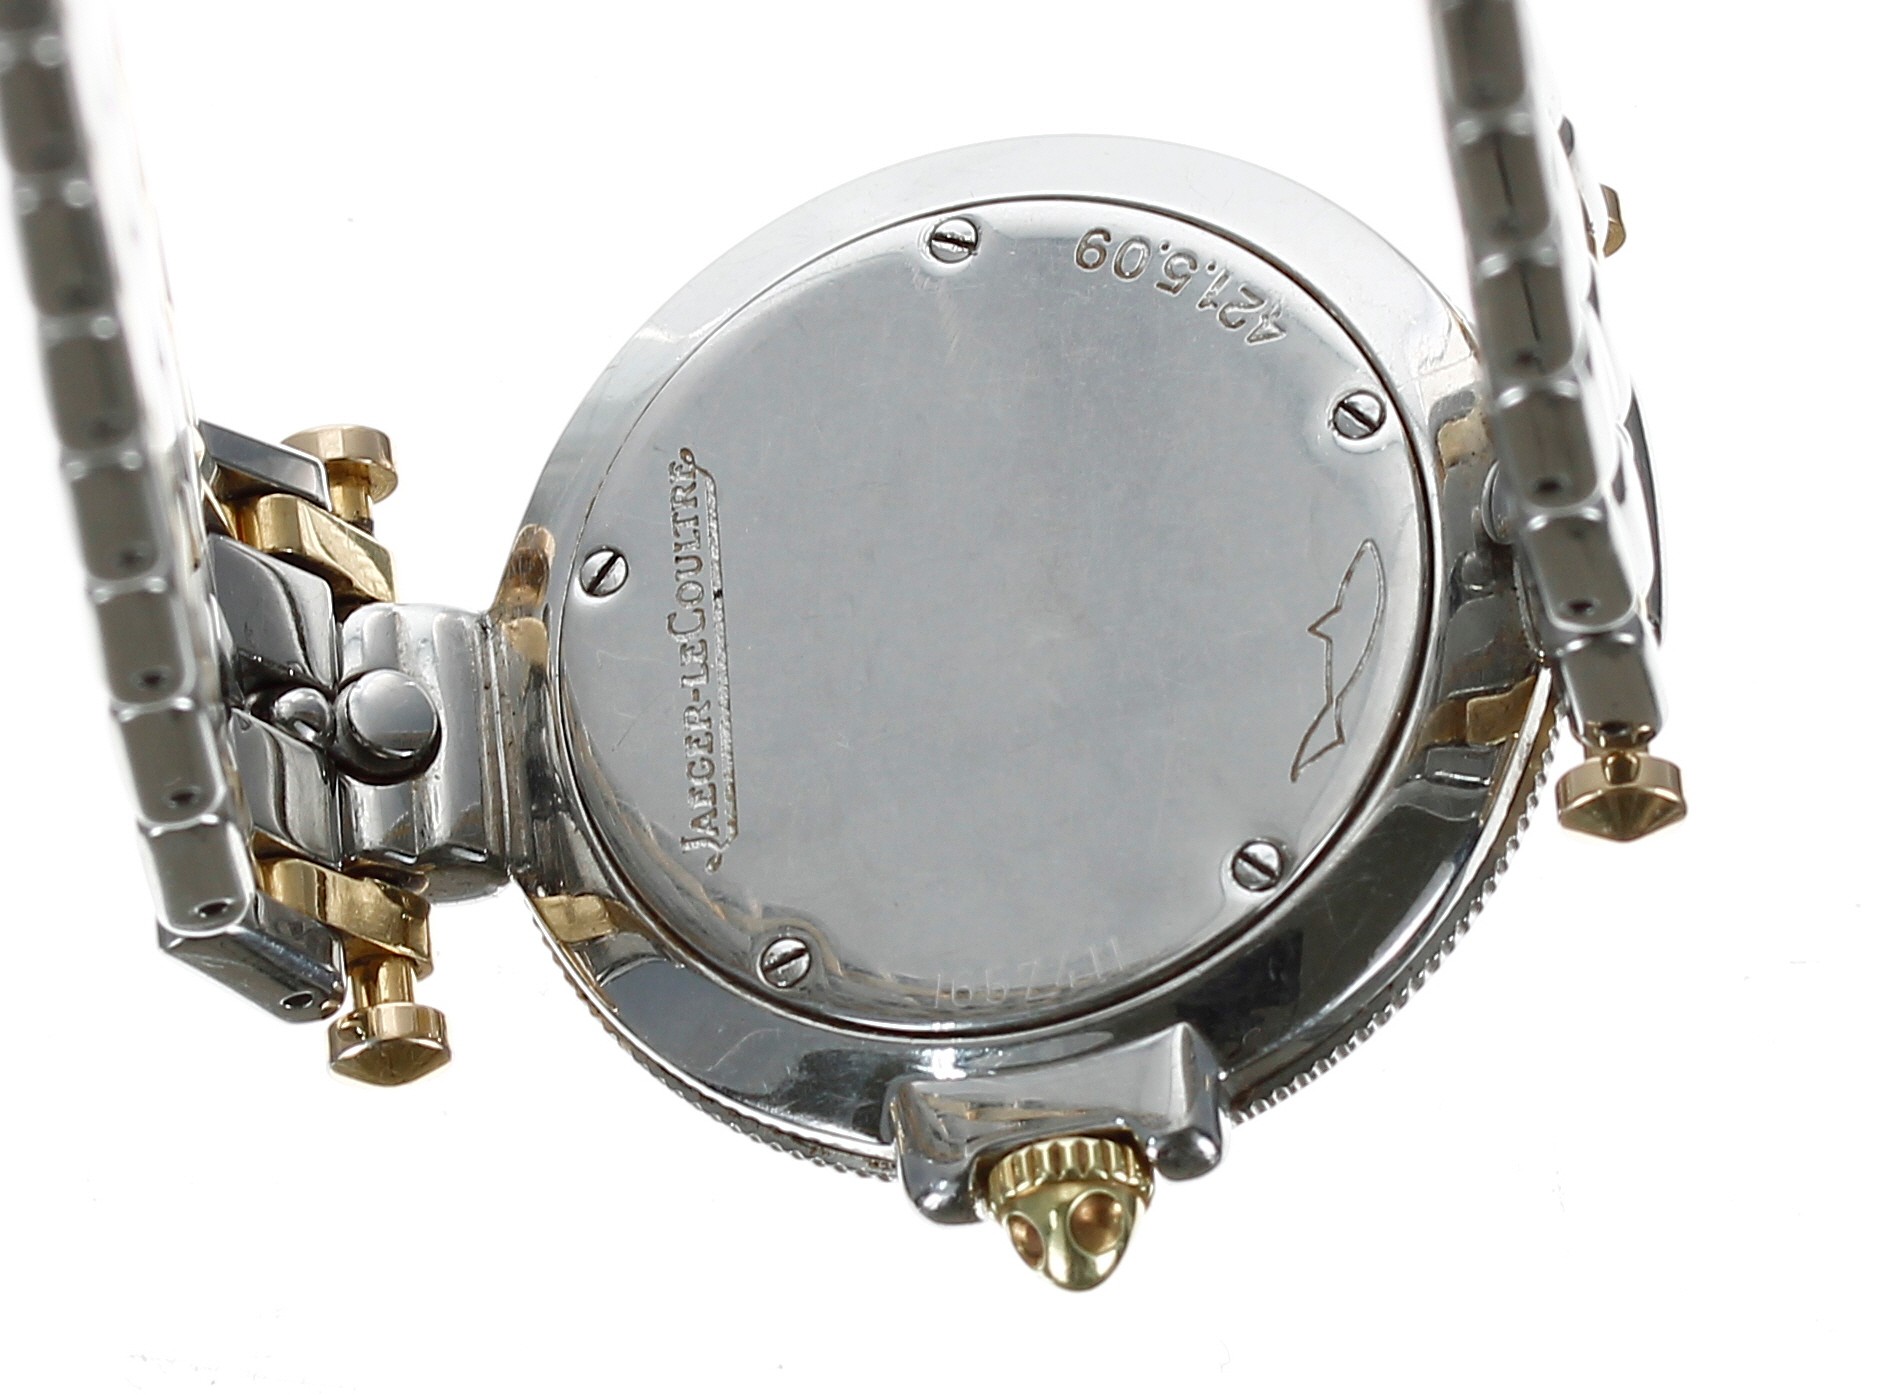 Jaeger-LeCoultre Rendez-Vous bicolour lady's wristwatch, reference no. 421.5.09, serial no. 1657xxx, - Image 2 of 2